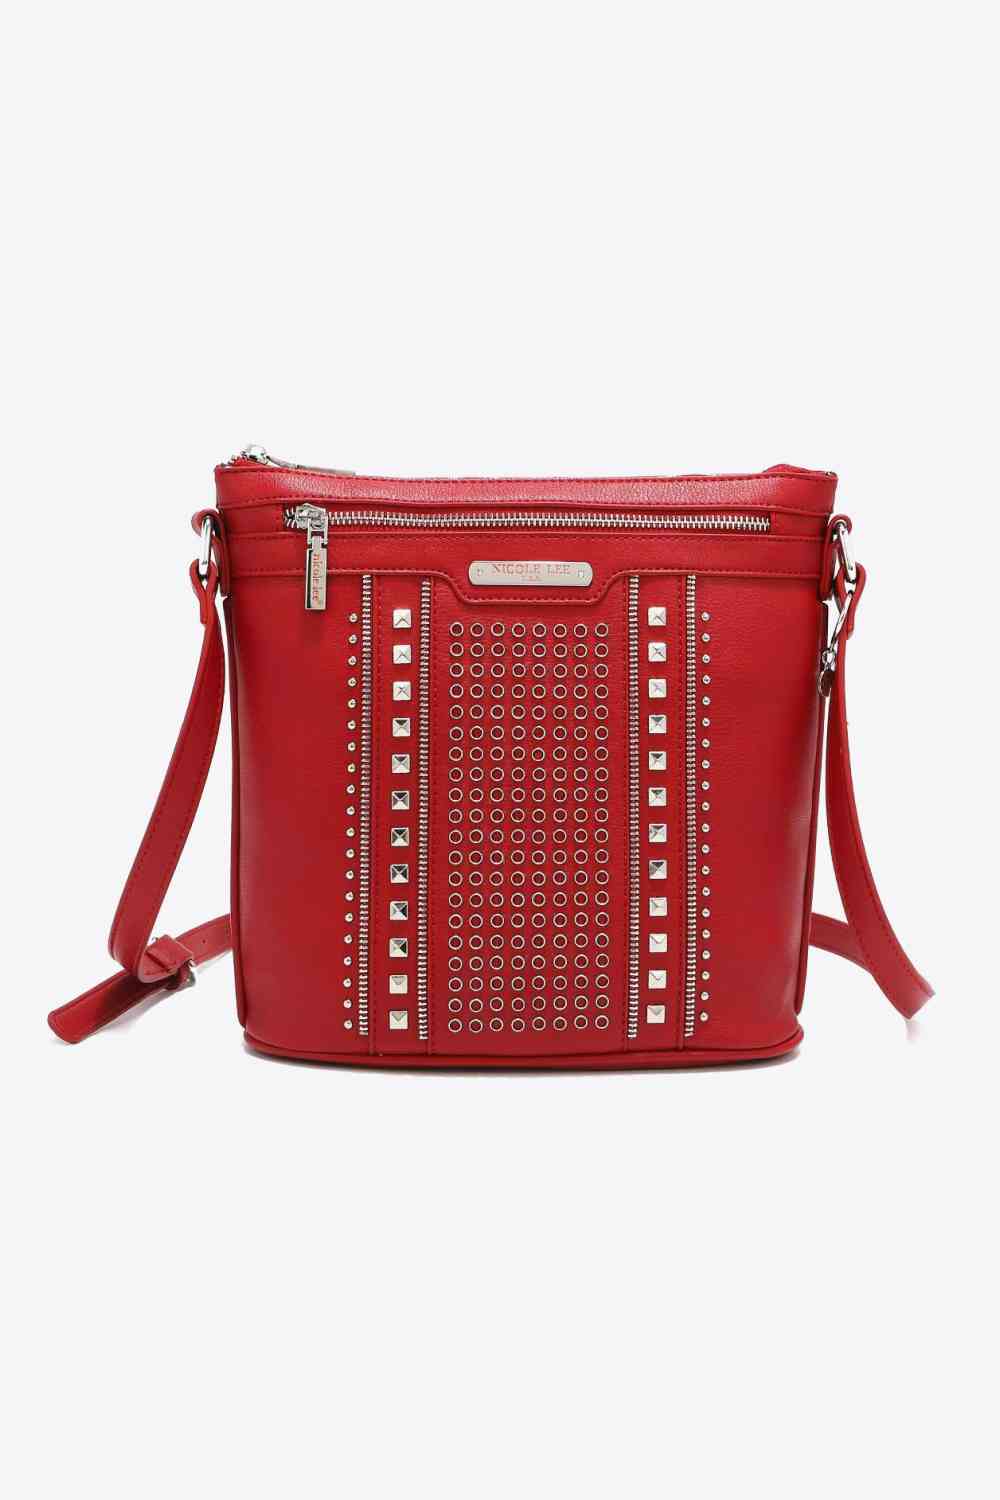 Nicole Lee USA Love Handbag - GemThreads Boutique